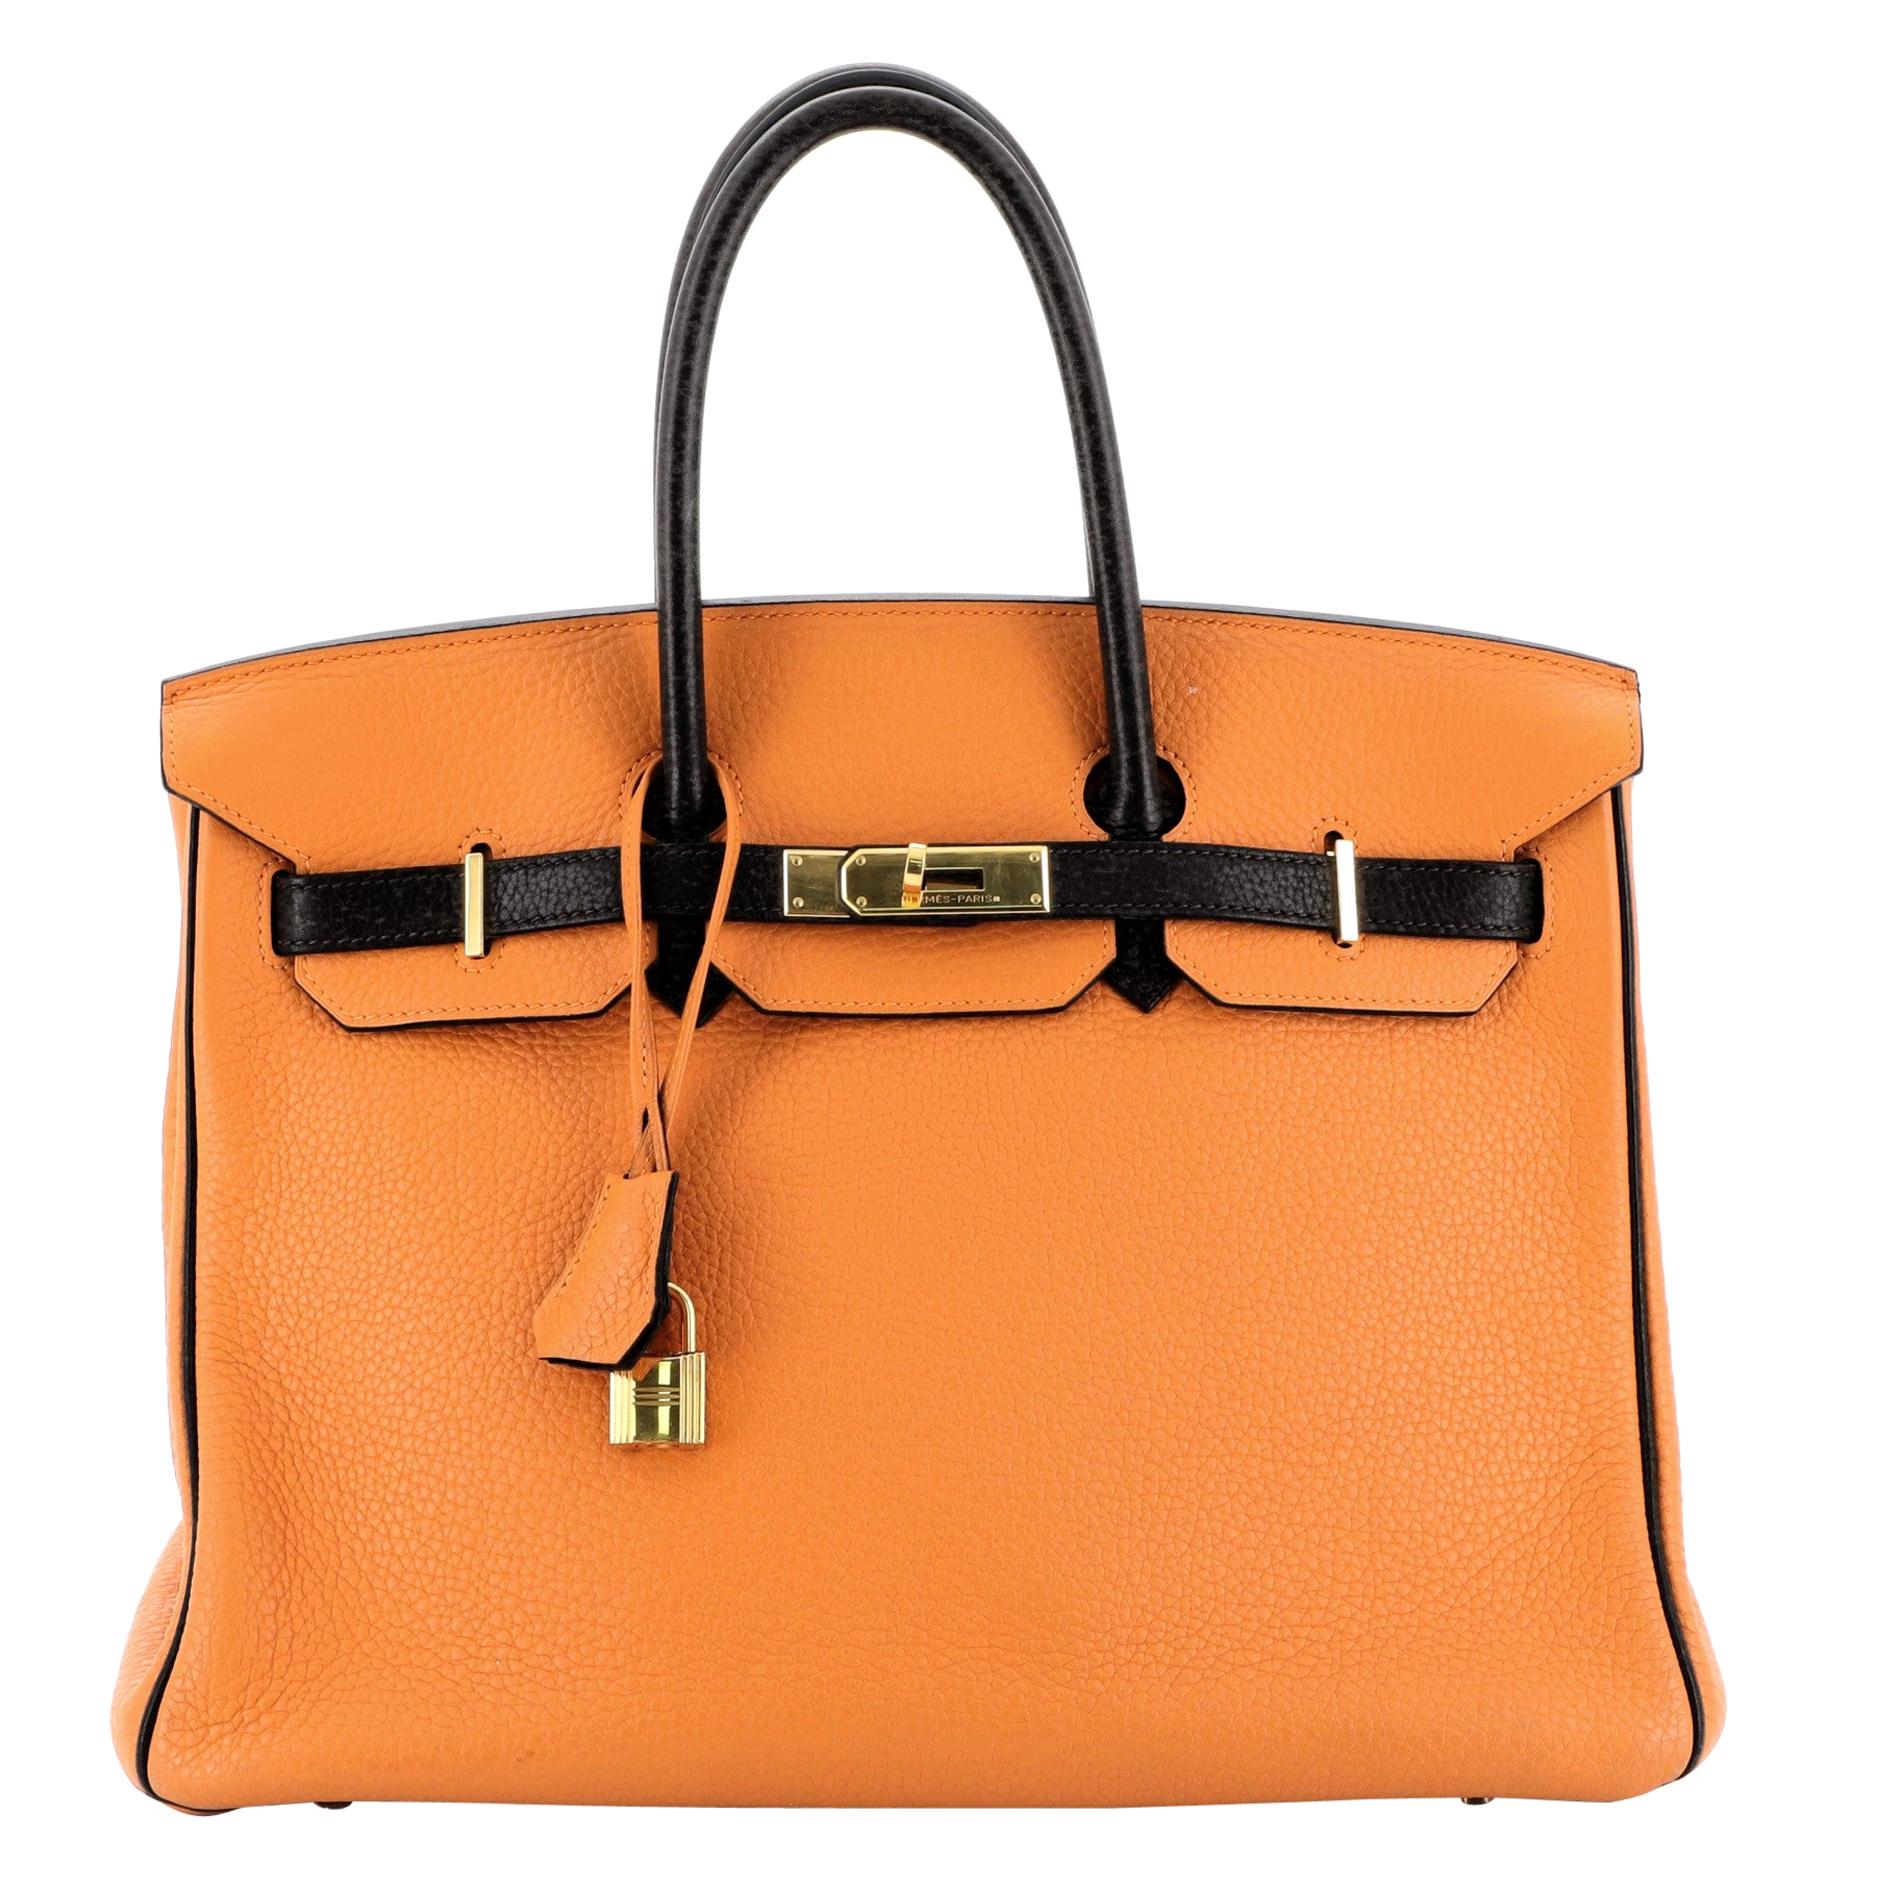 Hermes Birkin Handbag Bicolor Clemence With Gold Hardware 35